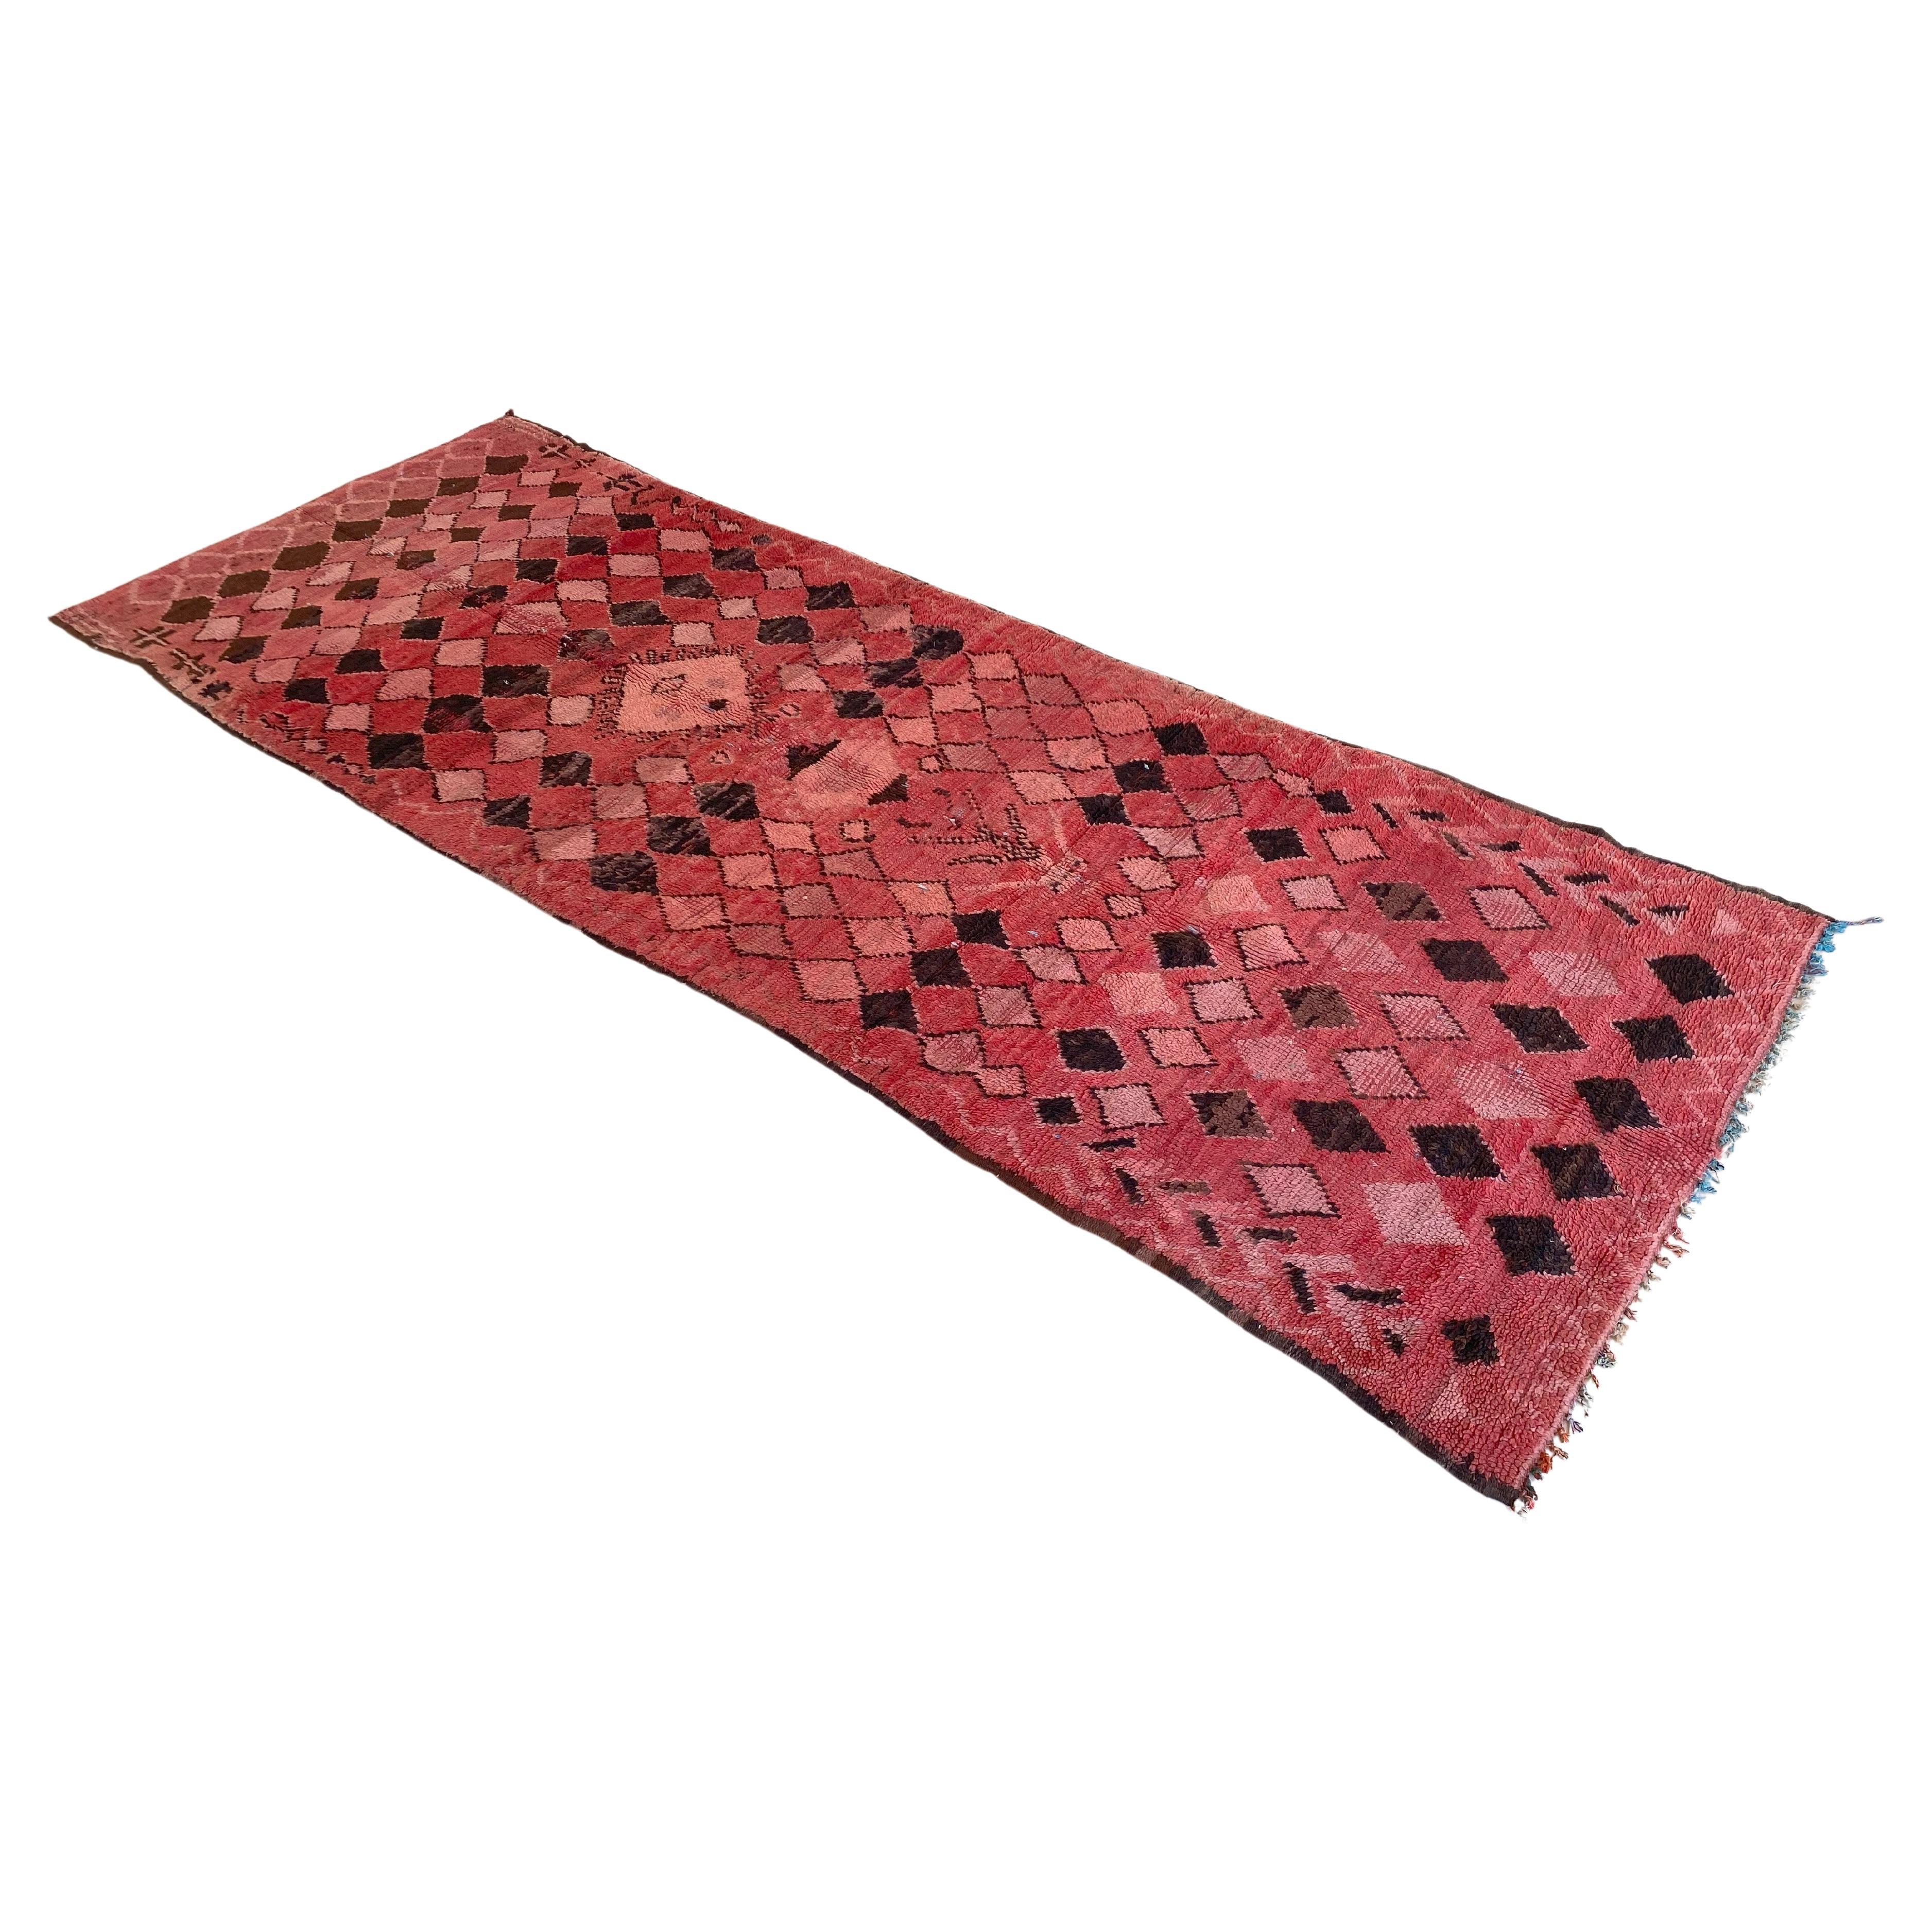 Vintage Moroccan Boujad rug - Red/black/pink - 4.1x11.6feet / 126x354cm For Sale